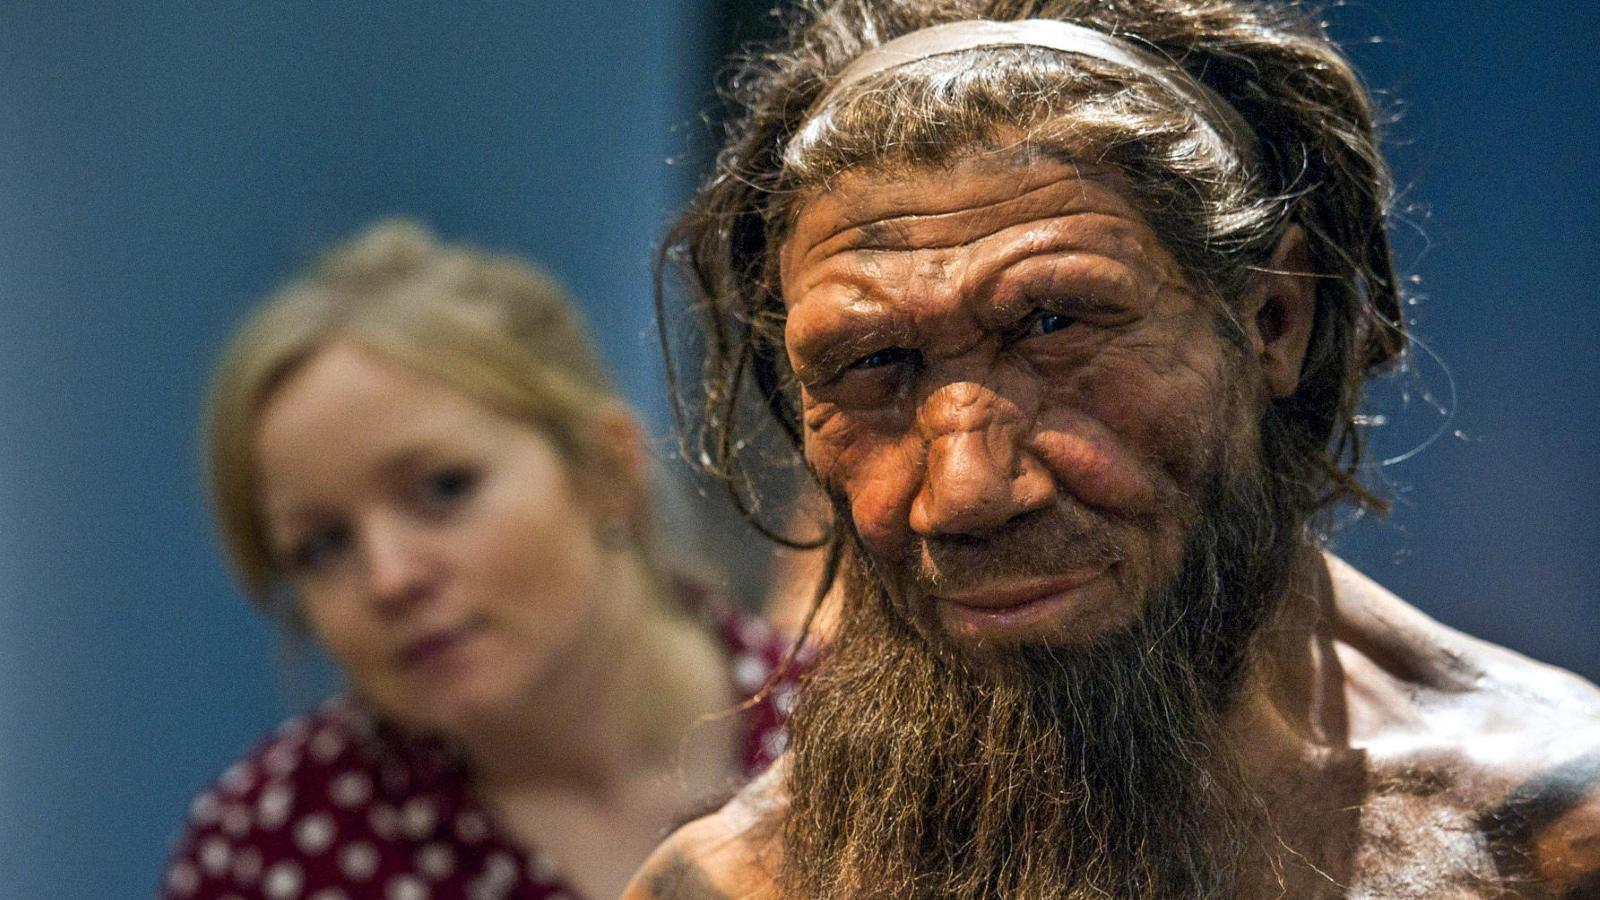 homo neanderthalensis